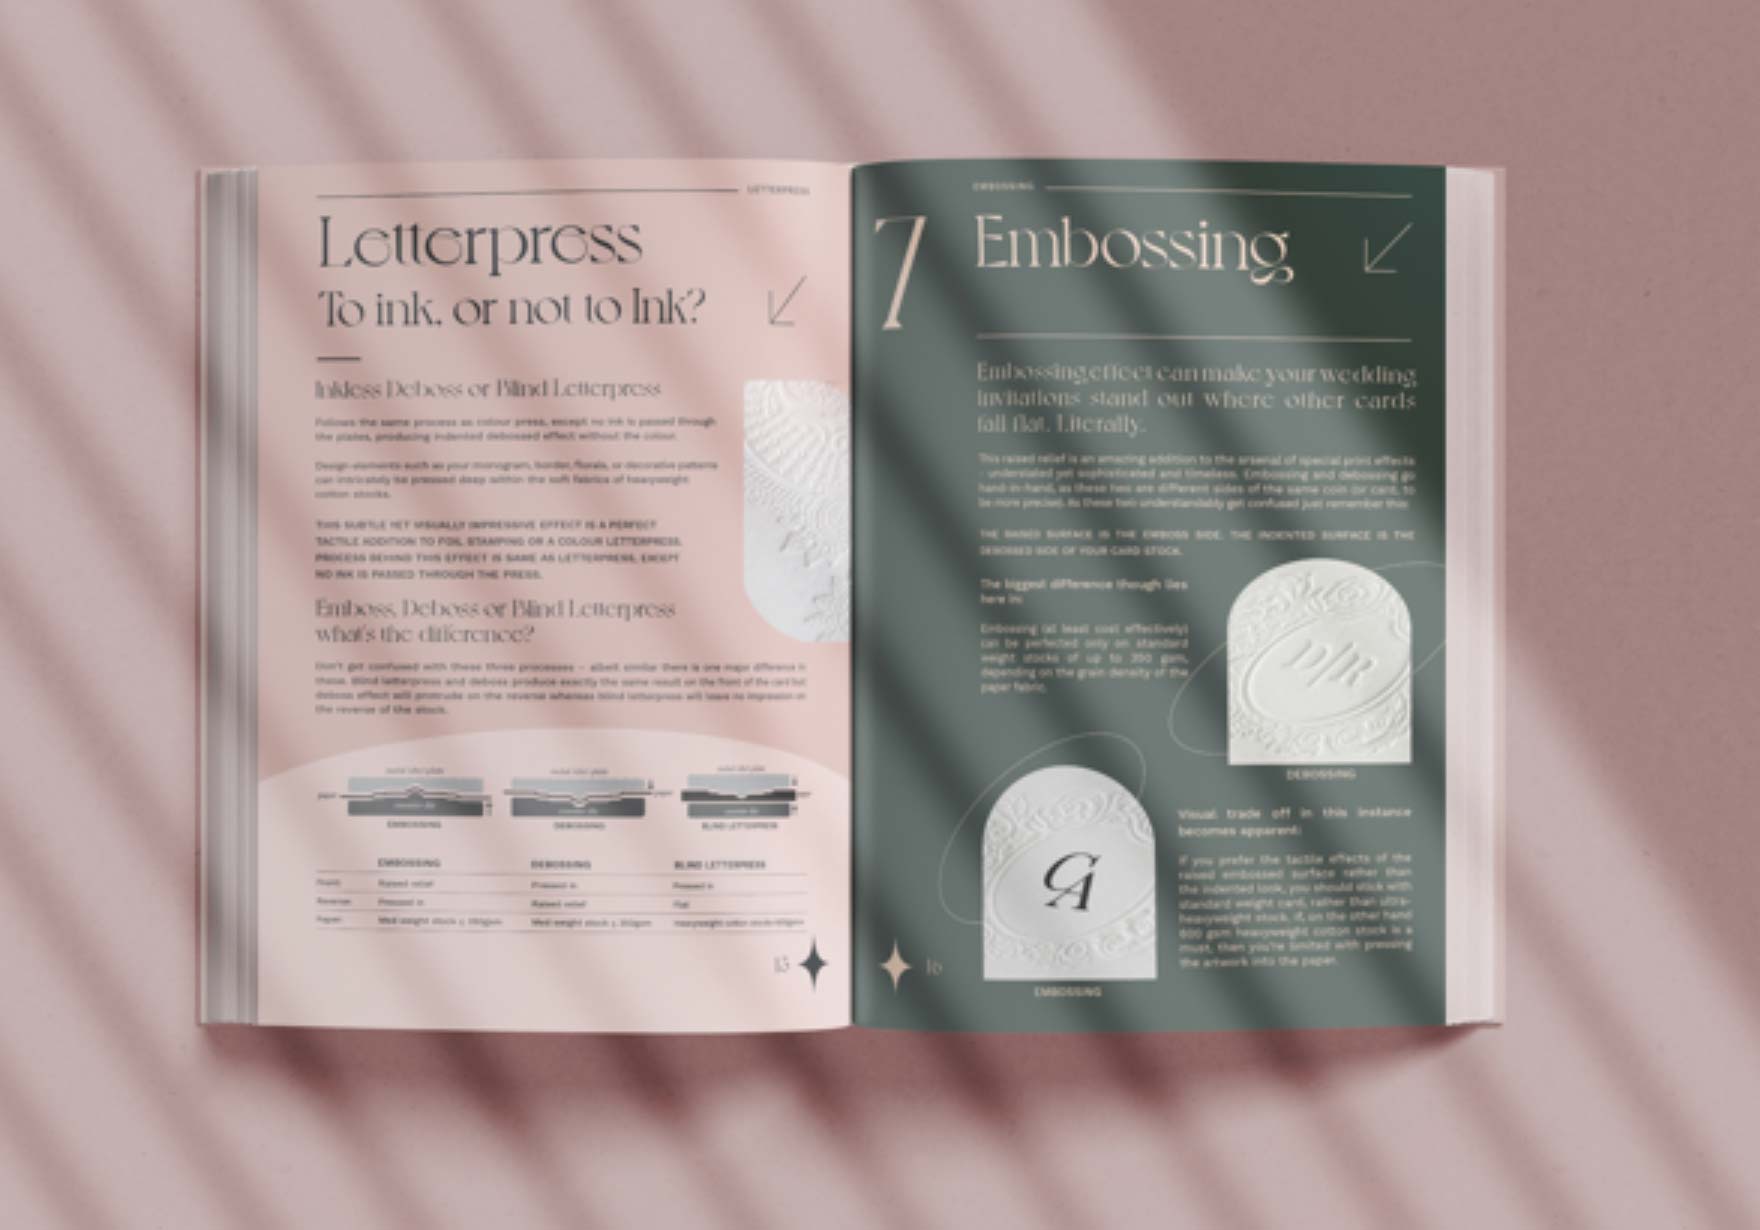  debossing, embossing and blind (inkless) letterpress